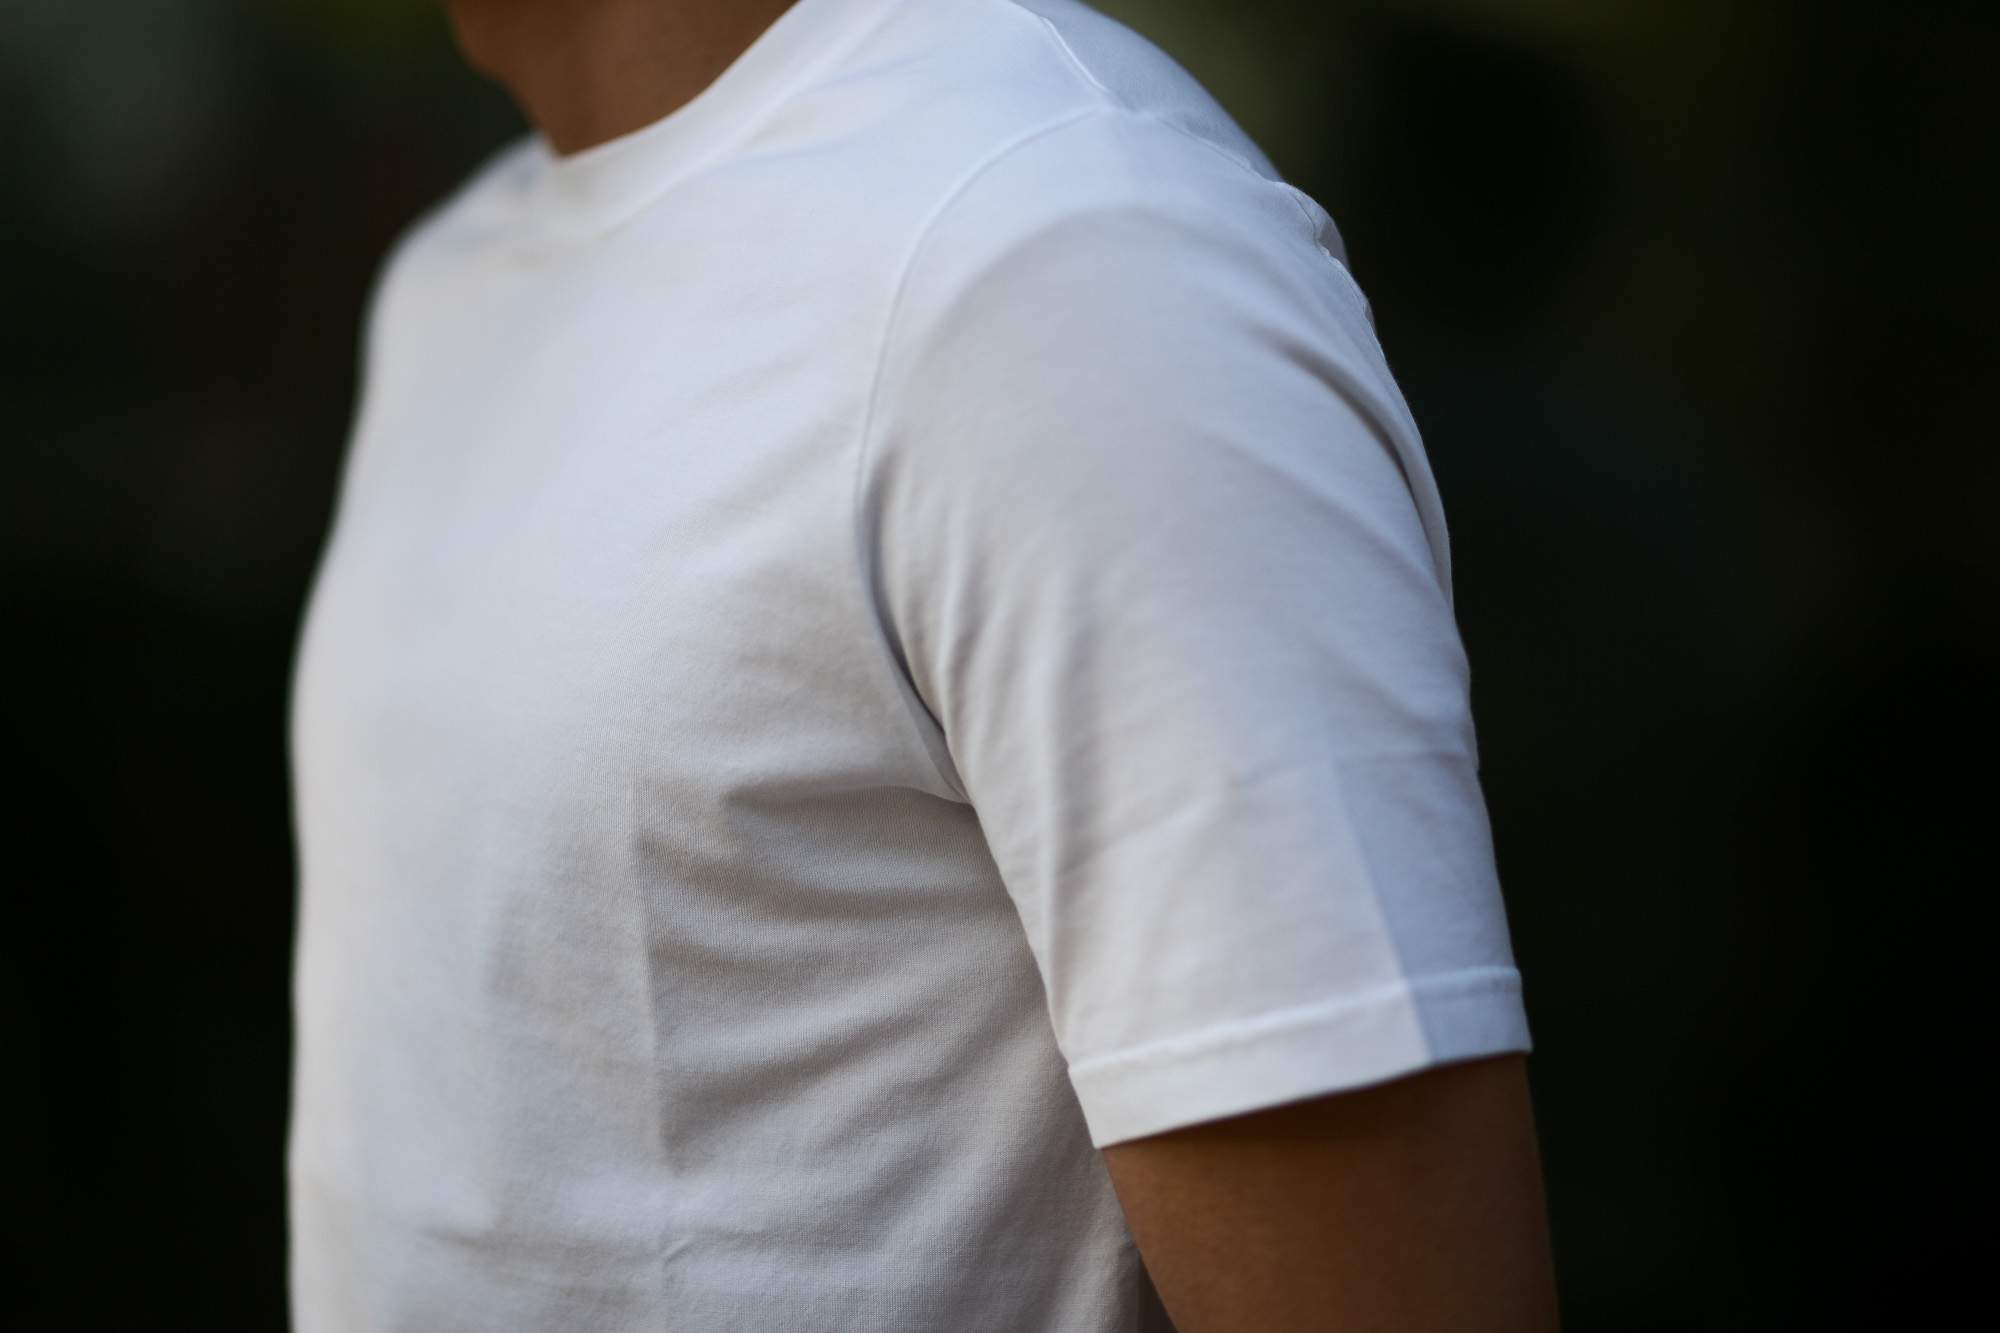 FEDELI(フェデーリ) Crew Neck T-shirt (クルーネック Tシャツ) ギザコットン Tシャツ WHITE (ホワイト・41) made in italy (イタリア製) 2020 春夏 【ご予約受付中】 愛知 名古屋 altoediritto アルトエデリット TEE